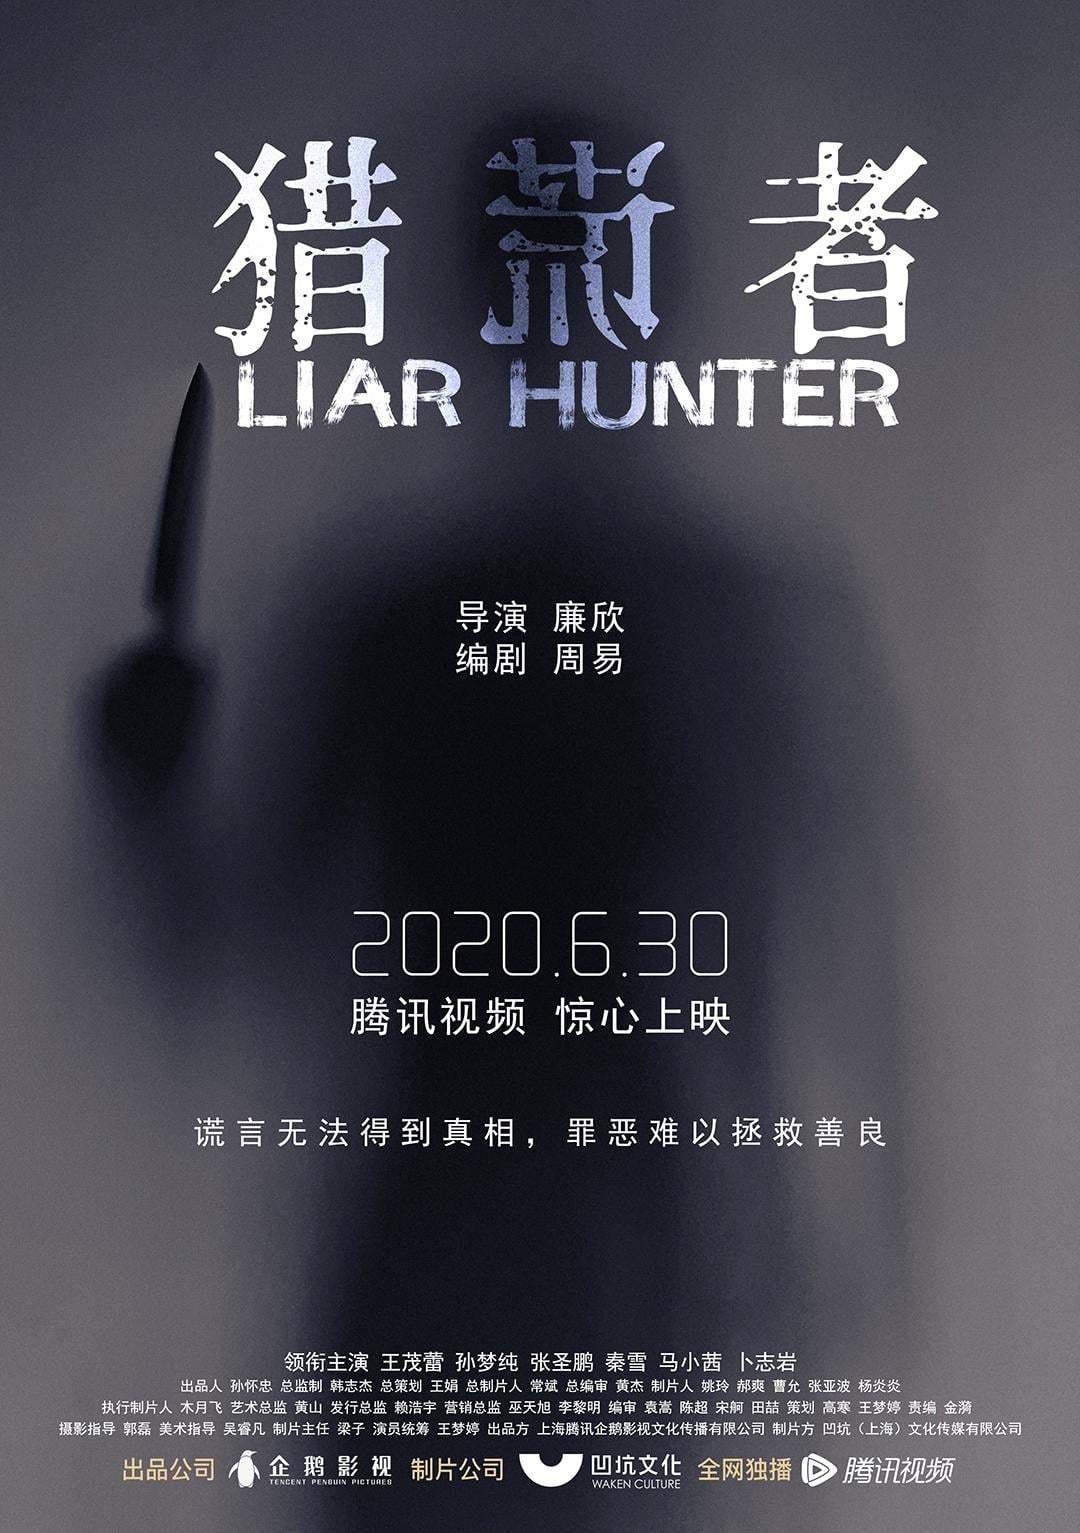 Liar Hunter